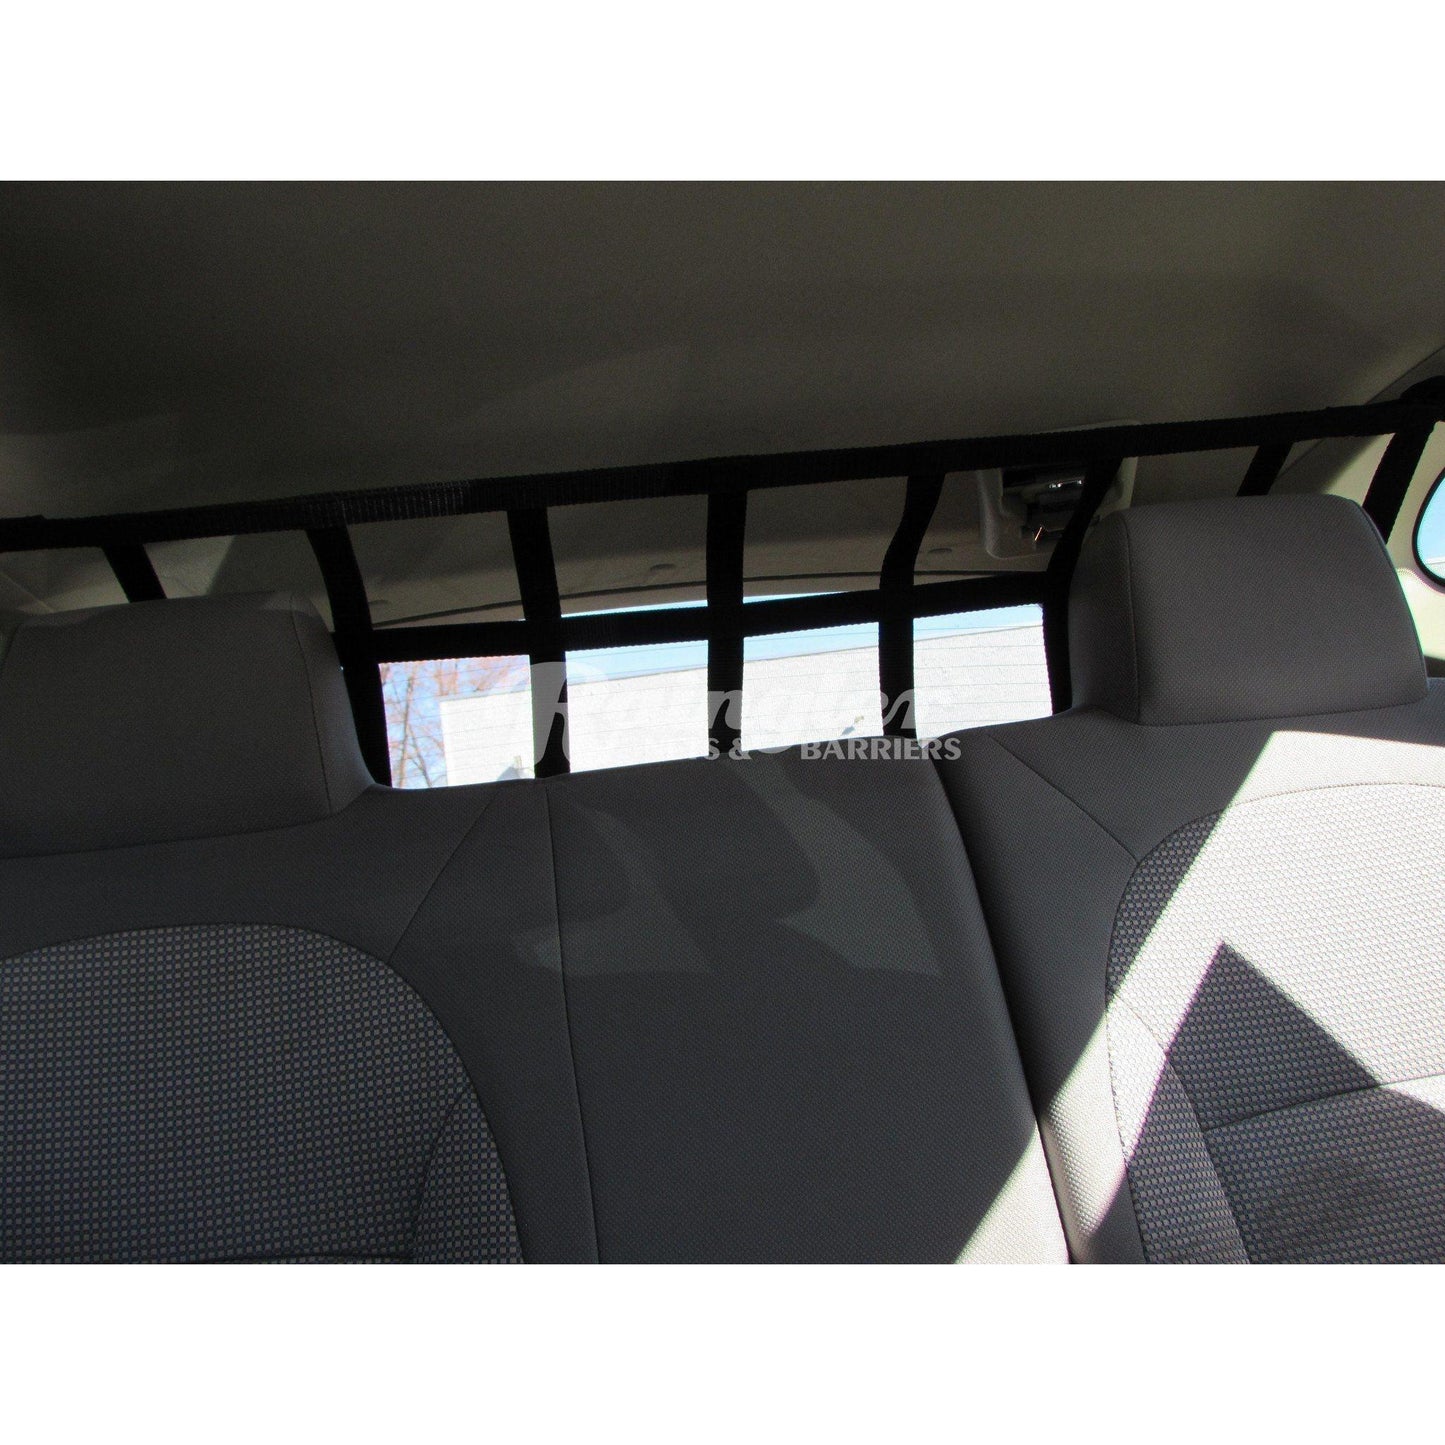 2019 - Newer Toyota RAV4 XA50 Behind 2nd Row Seats Rear Barrier Divider Net-Raingler